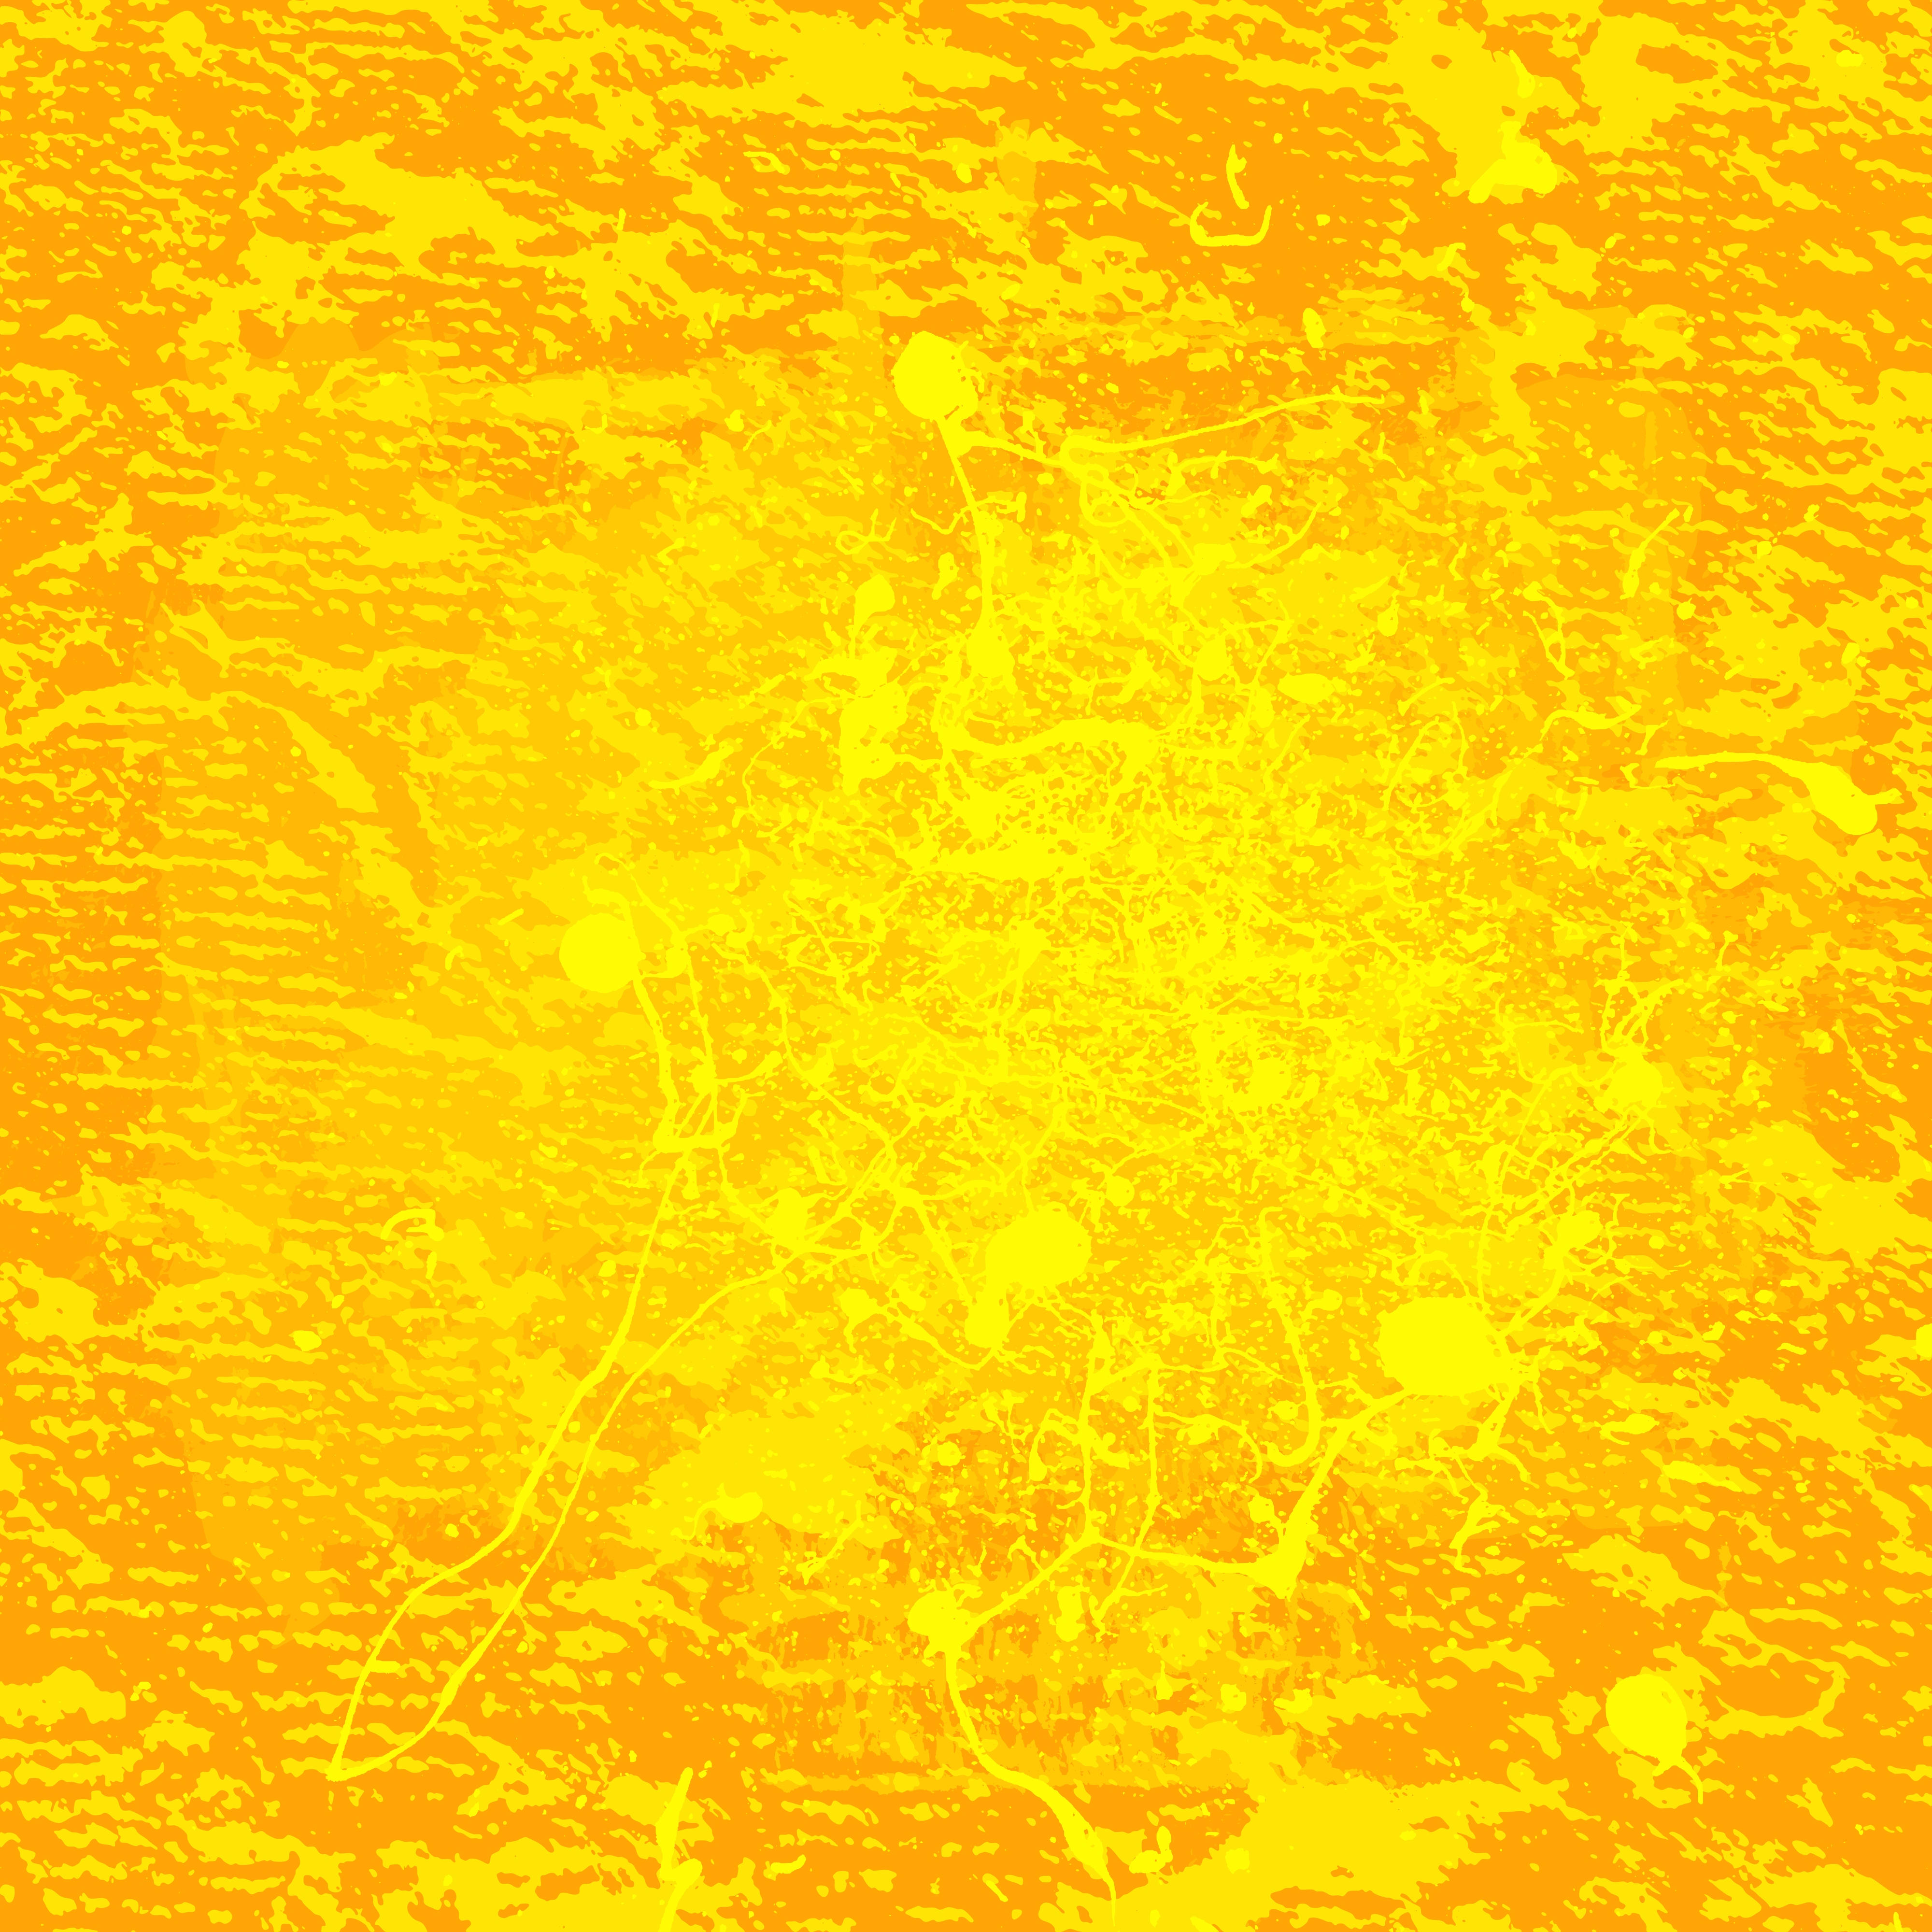 Yellow Grunge Background (JPG)